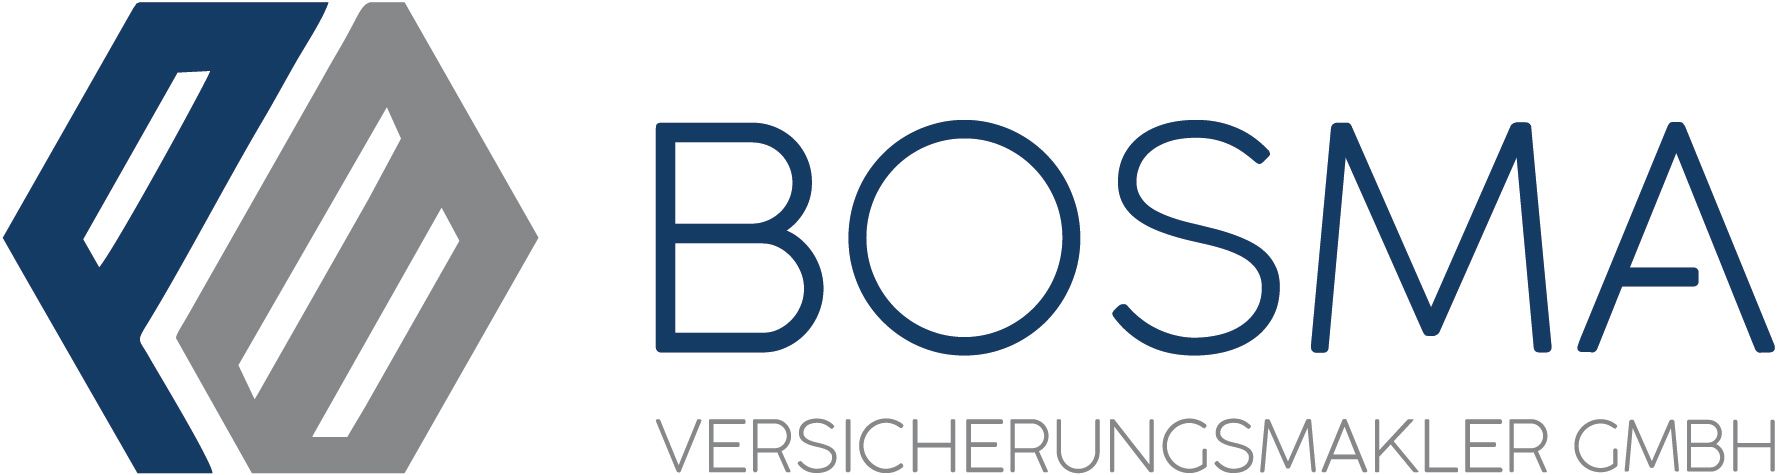 Patrick Bosma Versicherungsmakler GmbH Logo